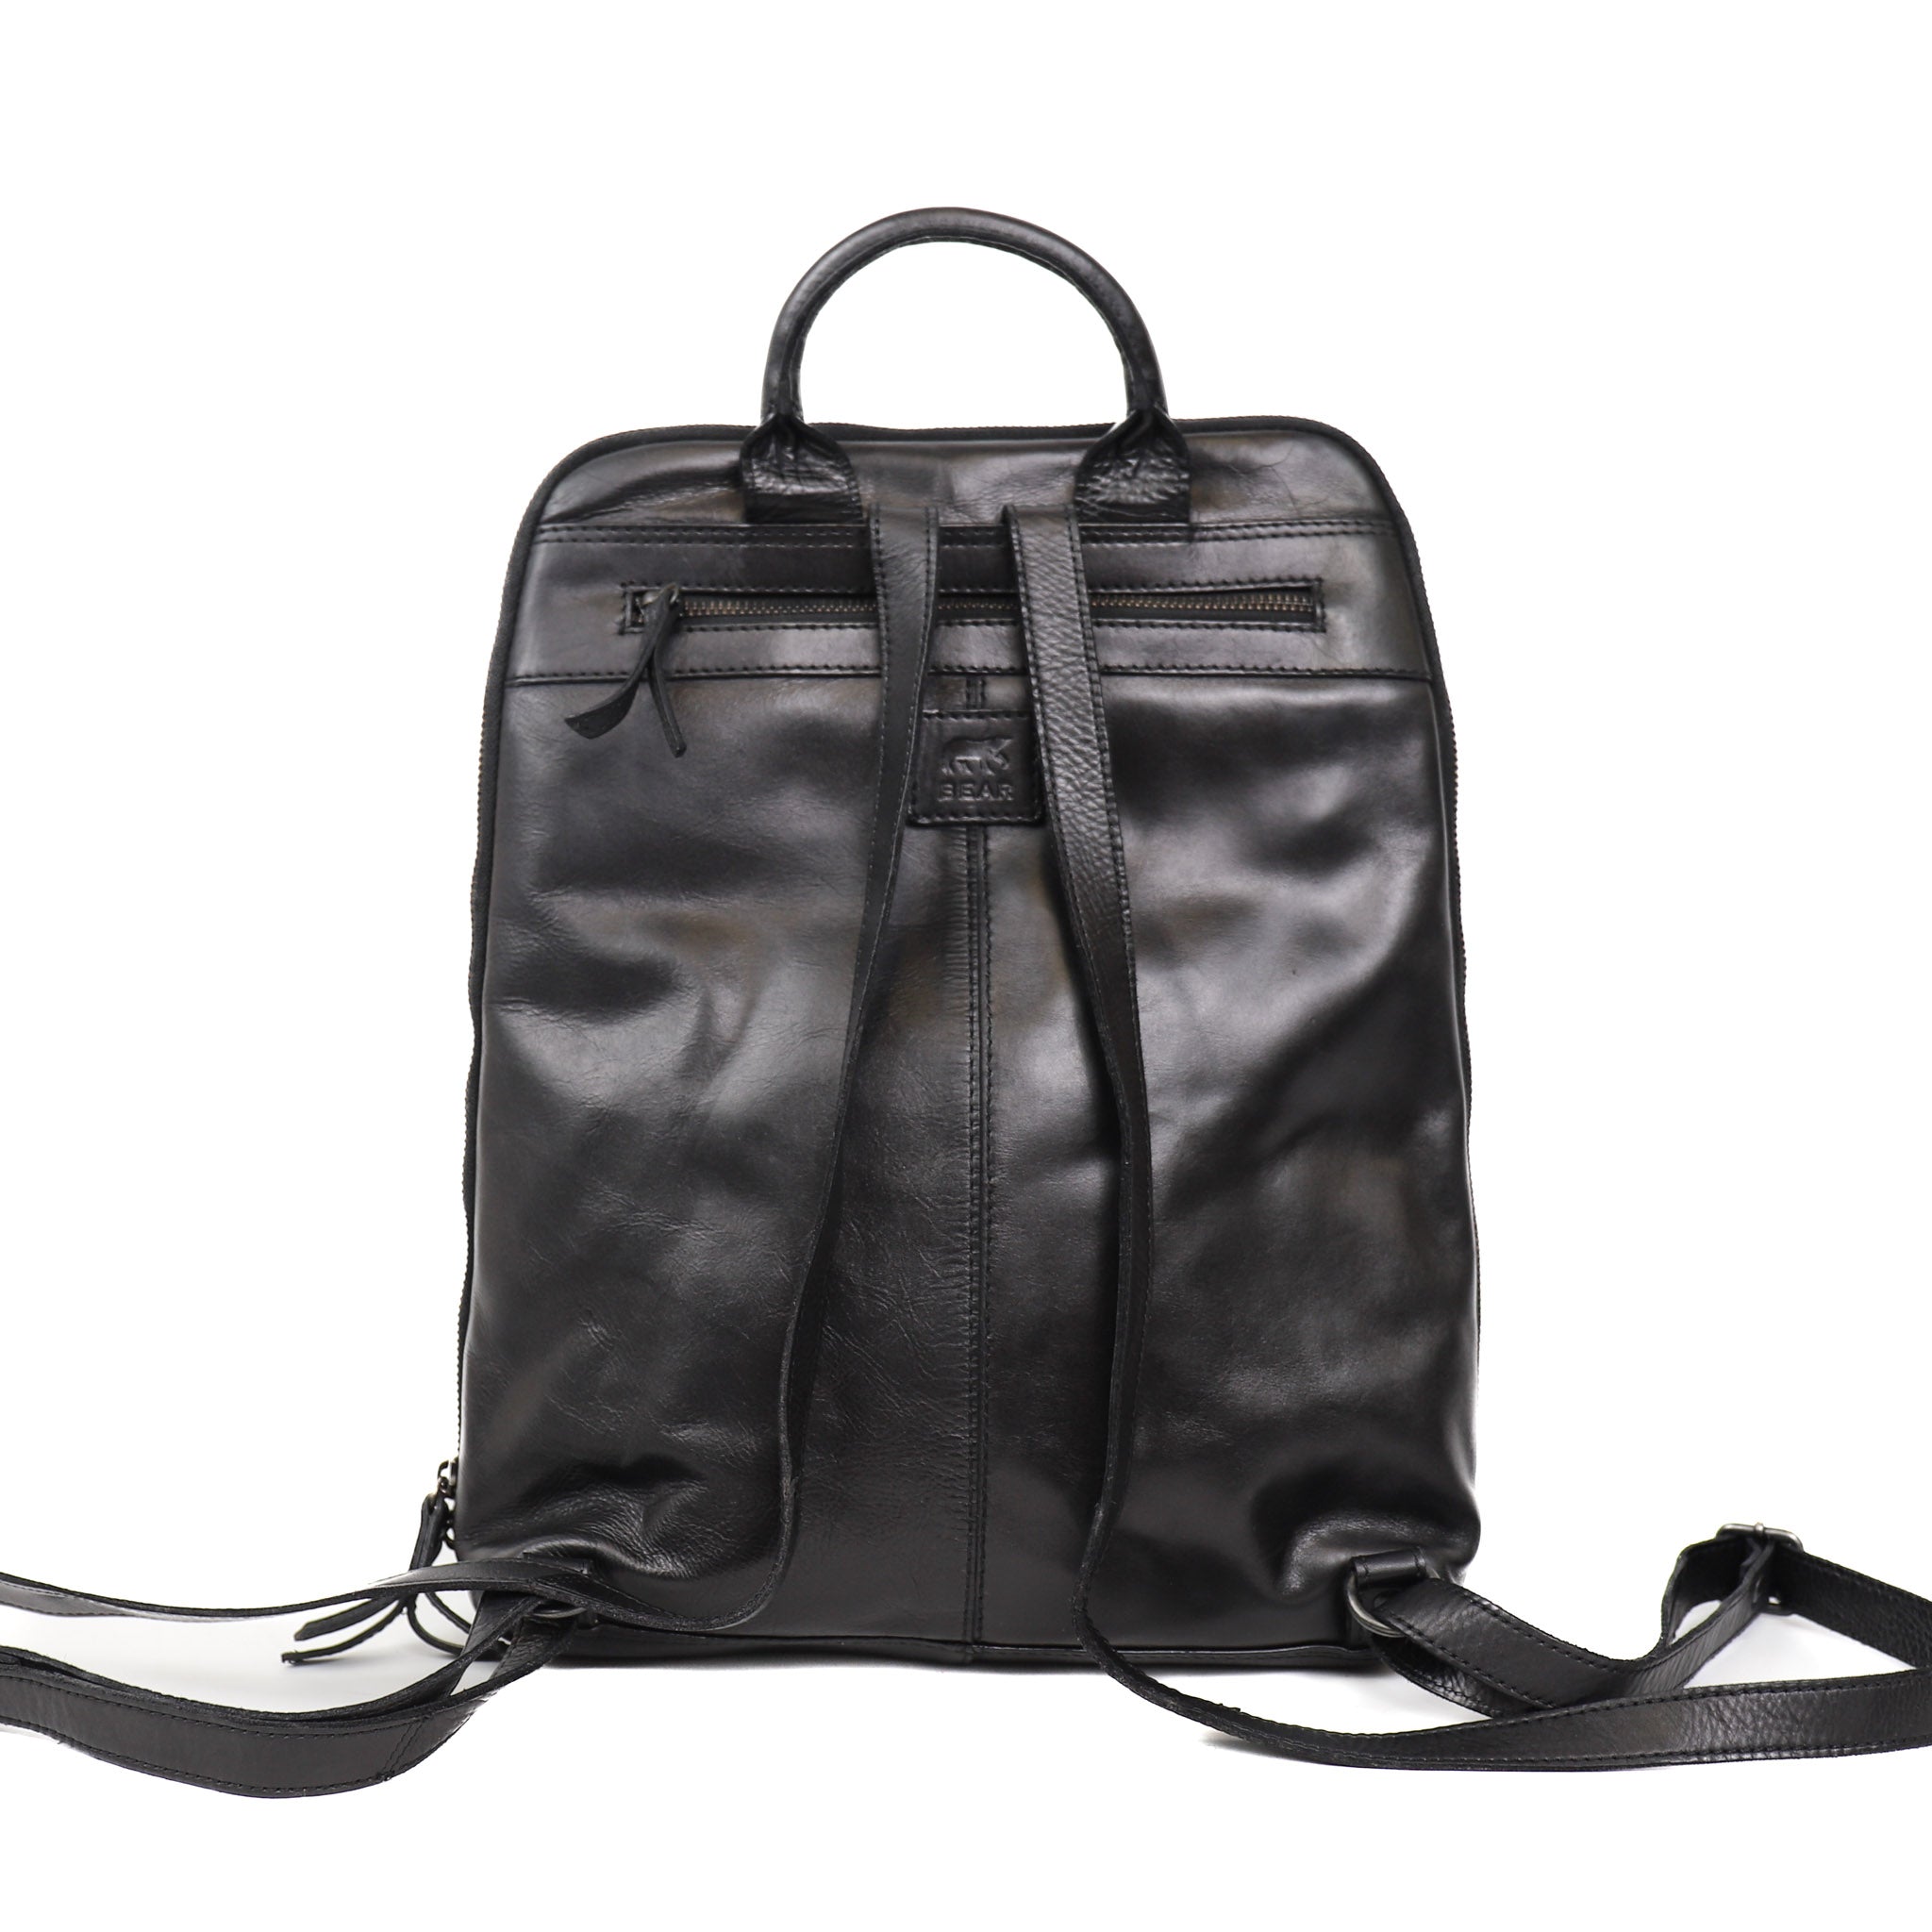 Backpack 'Ivanka' black - CL 40586